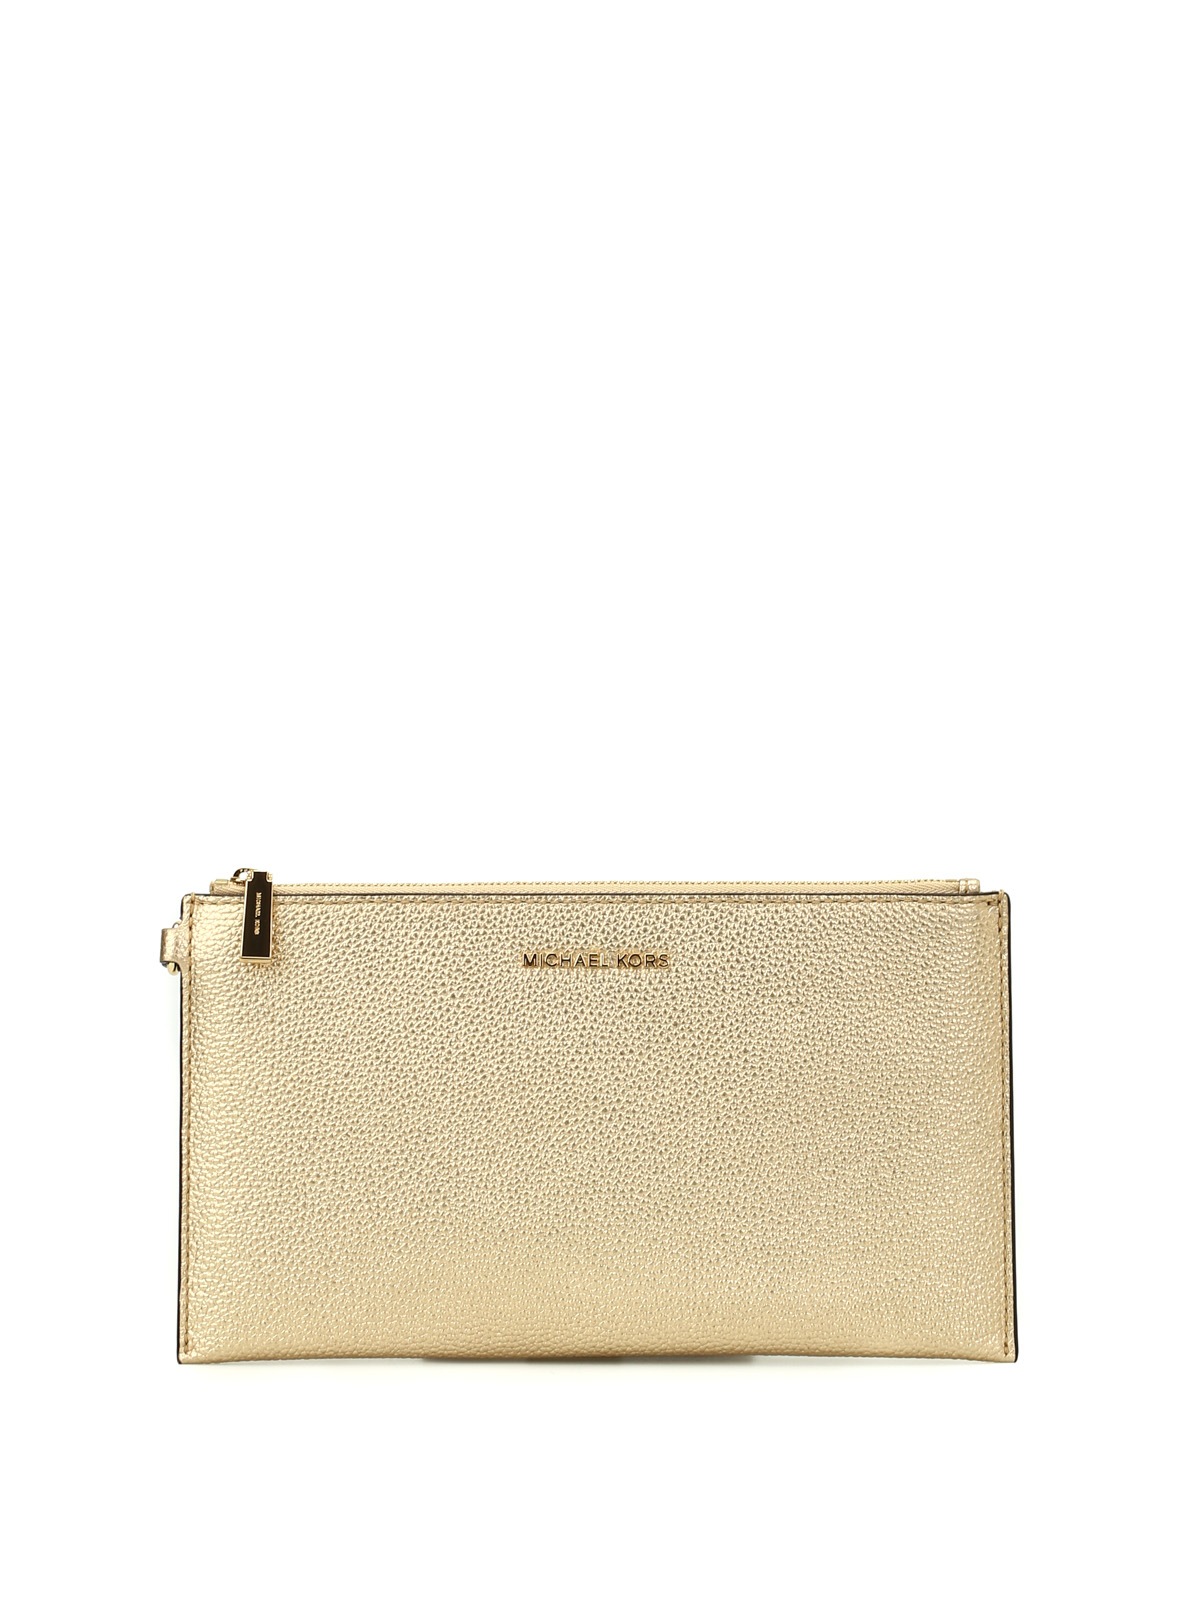 Wallets & purses Michael Kors - Wristlet gold flat purse